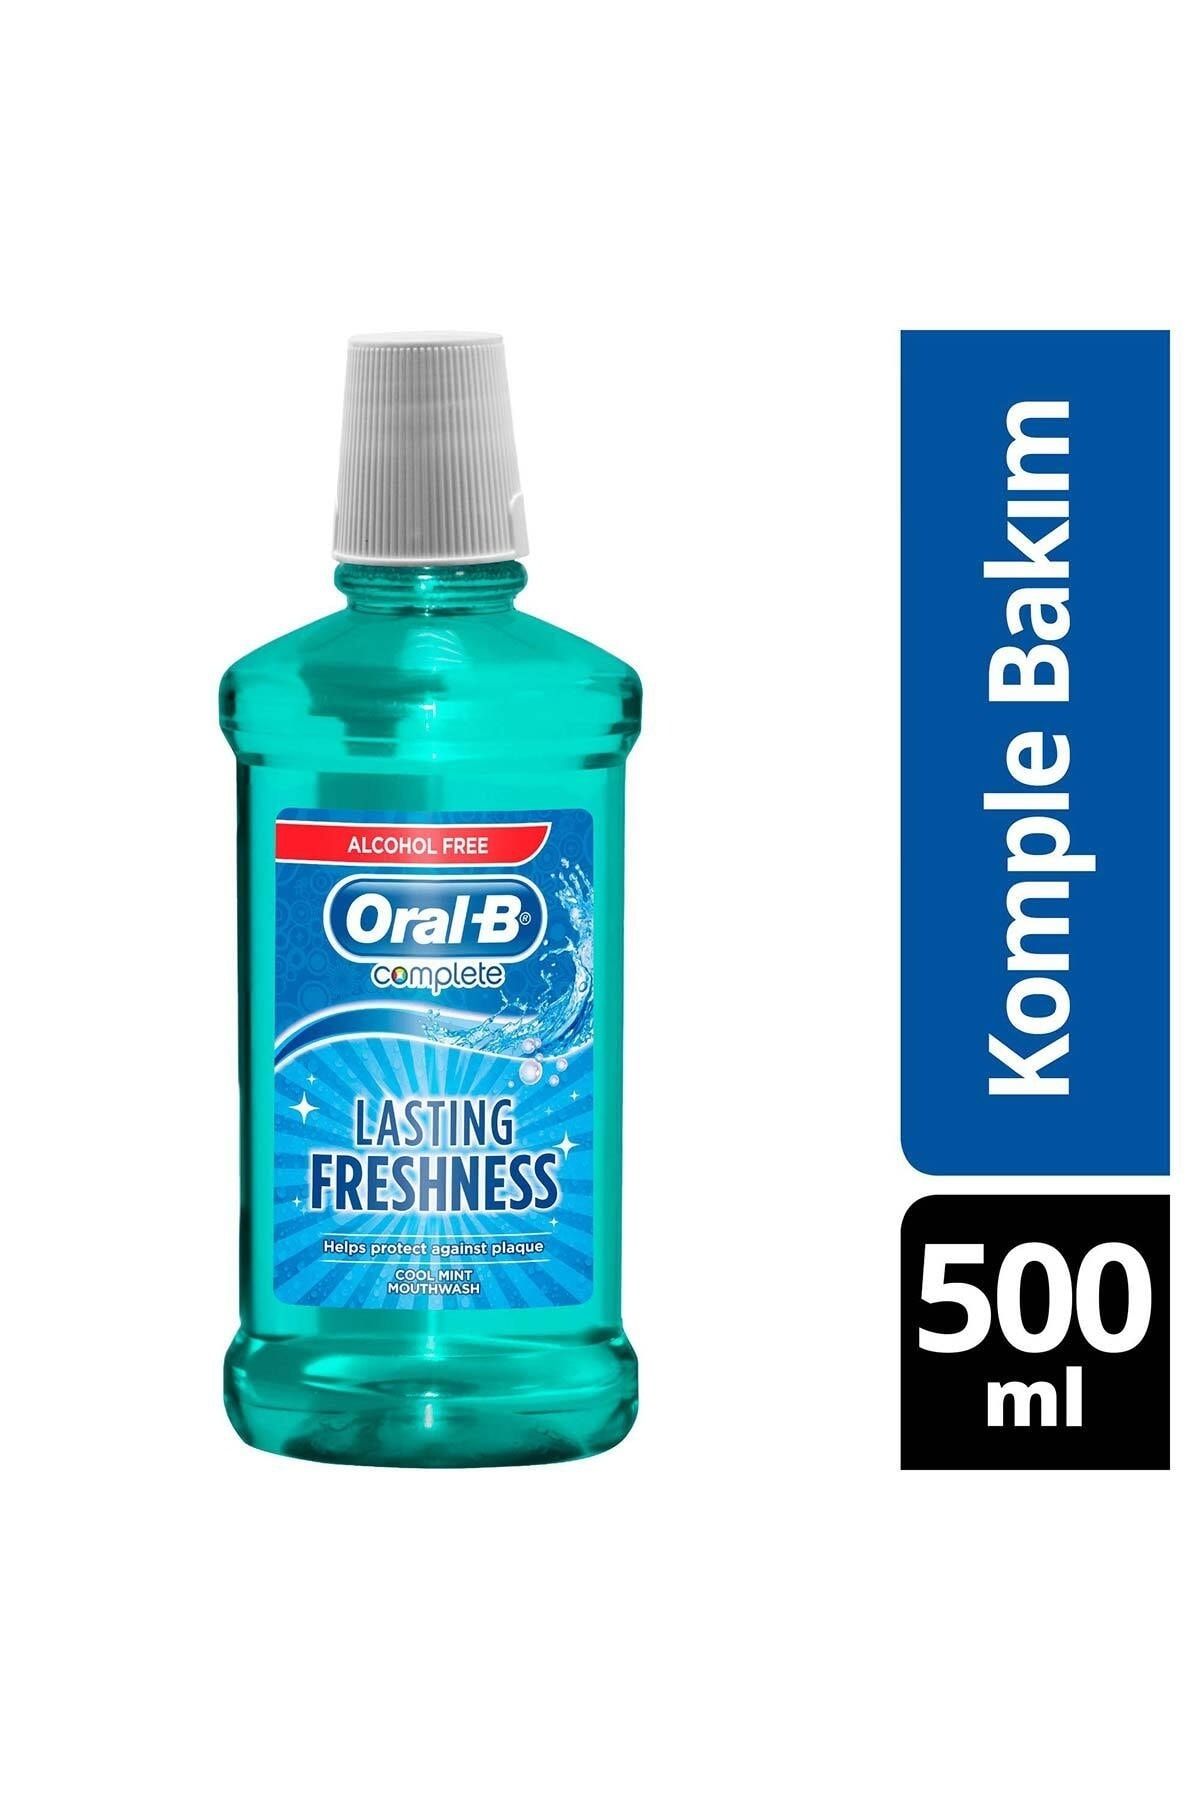 Oral-B Ağız Çalkalama Suyu Komple Bakım 500 ml (ALKOLSÜZ)